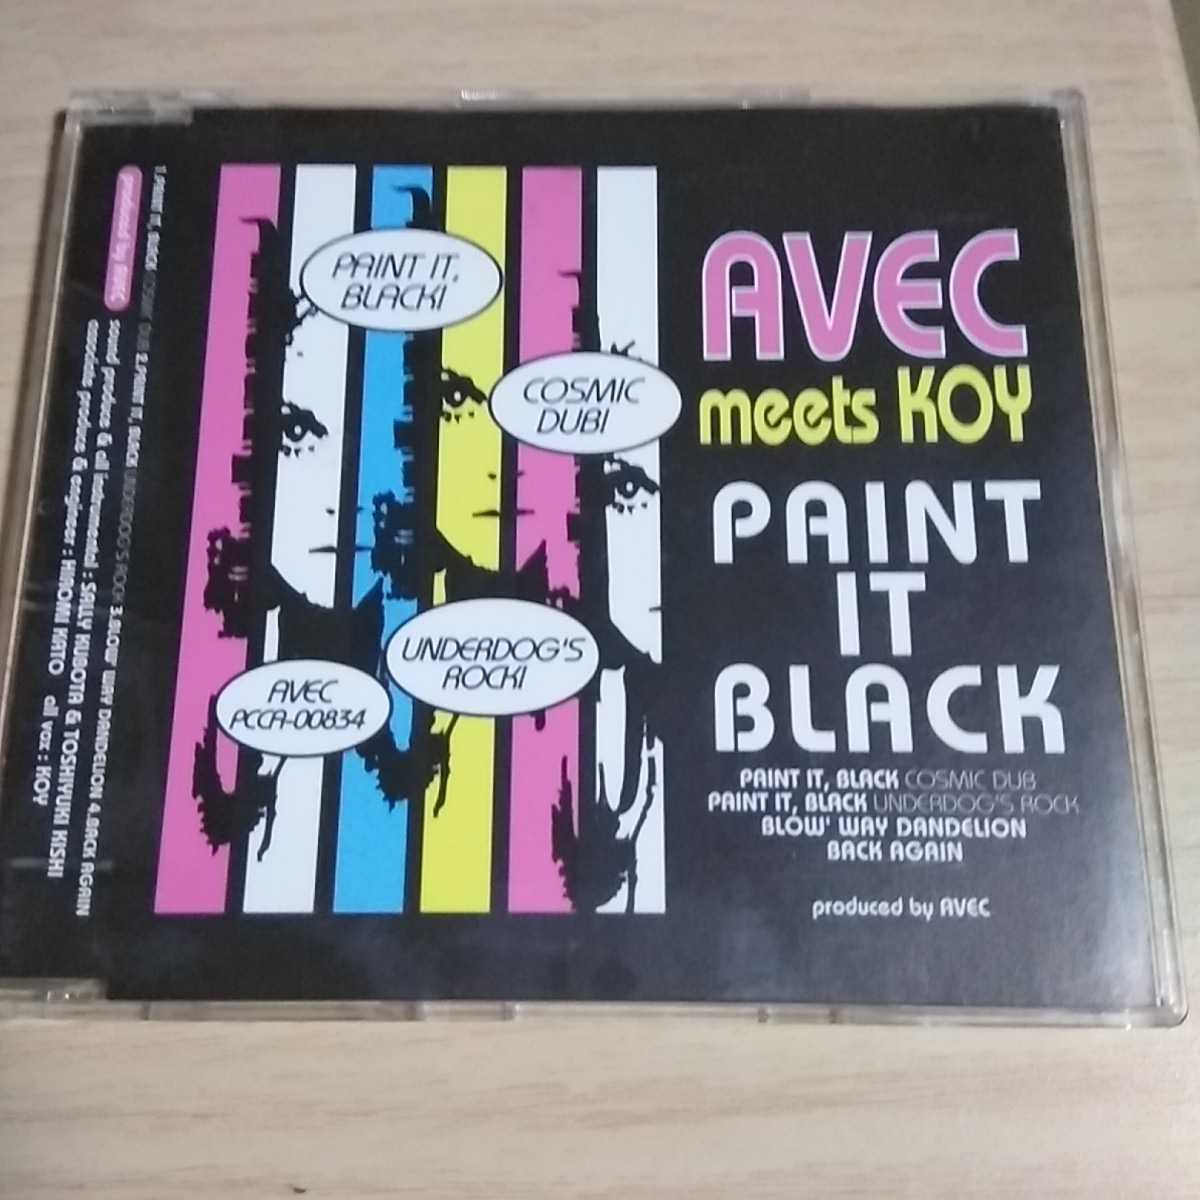 LM078 CD AVEC meet KOY １．PAINT IT, BLACK COSMIC DUB ２．PAINT IT, BLACK UNDERDOG’S ROCKの画像1